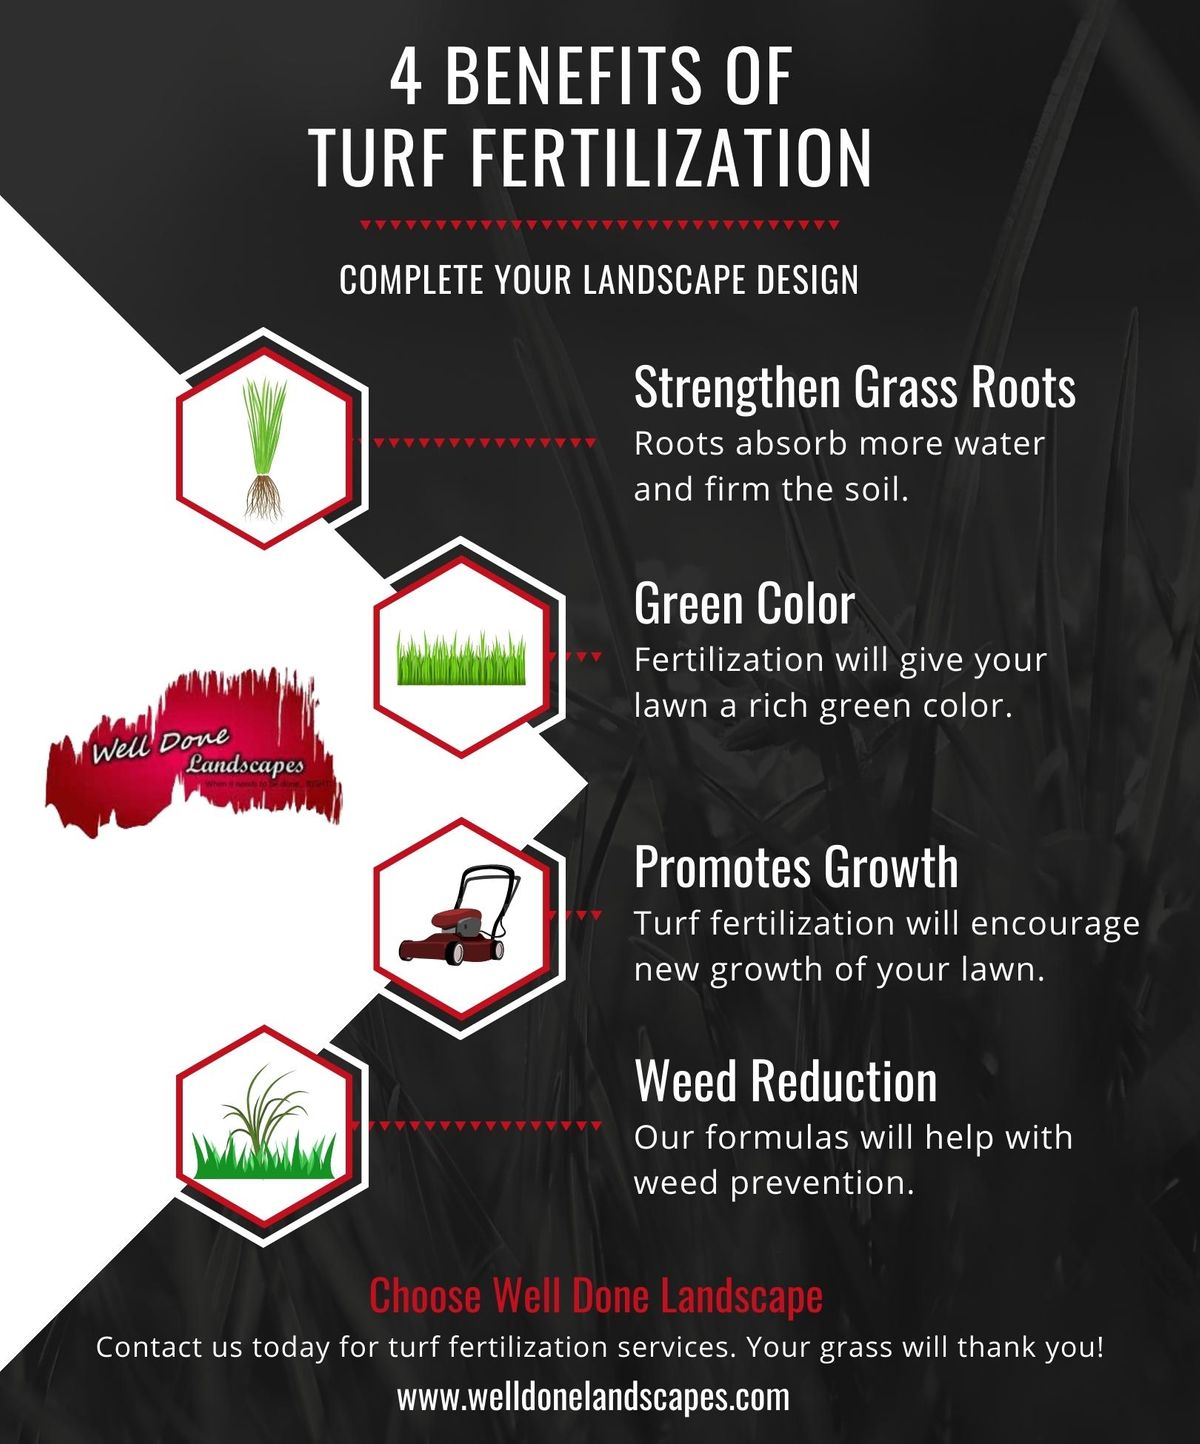 4 Benefits of Turf Fertilization  infographic